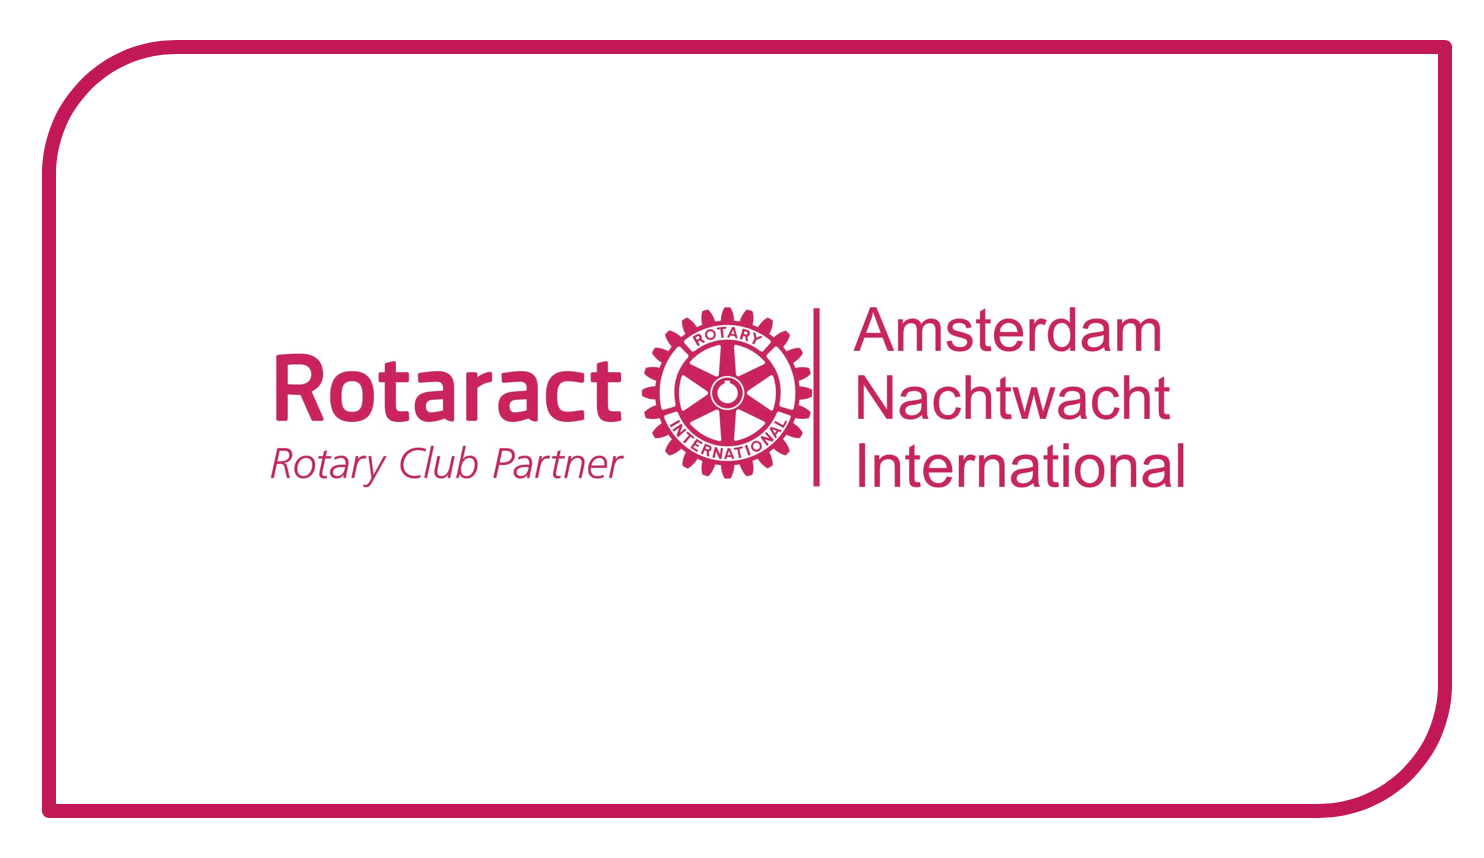 Rotaract Club Amsterdam Nachtwacht International